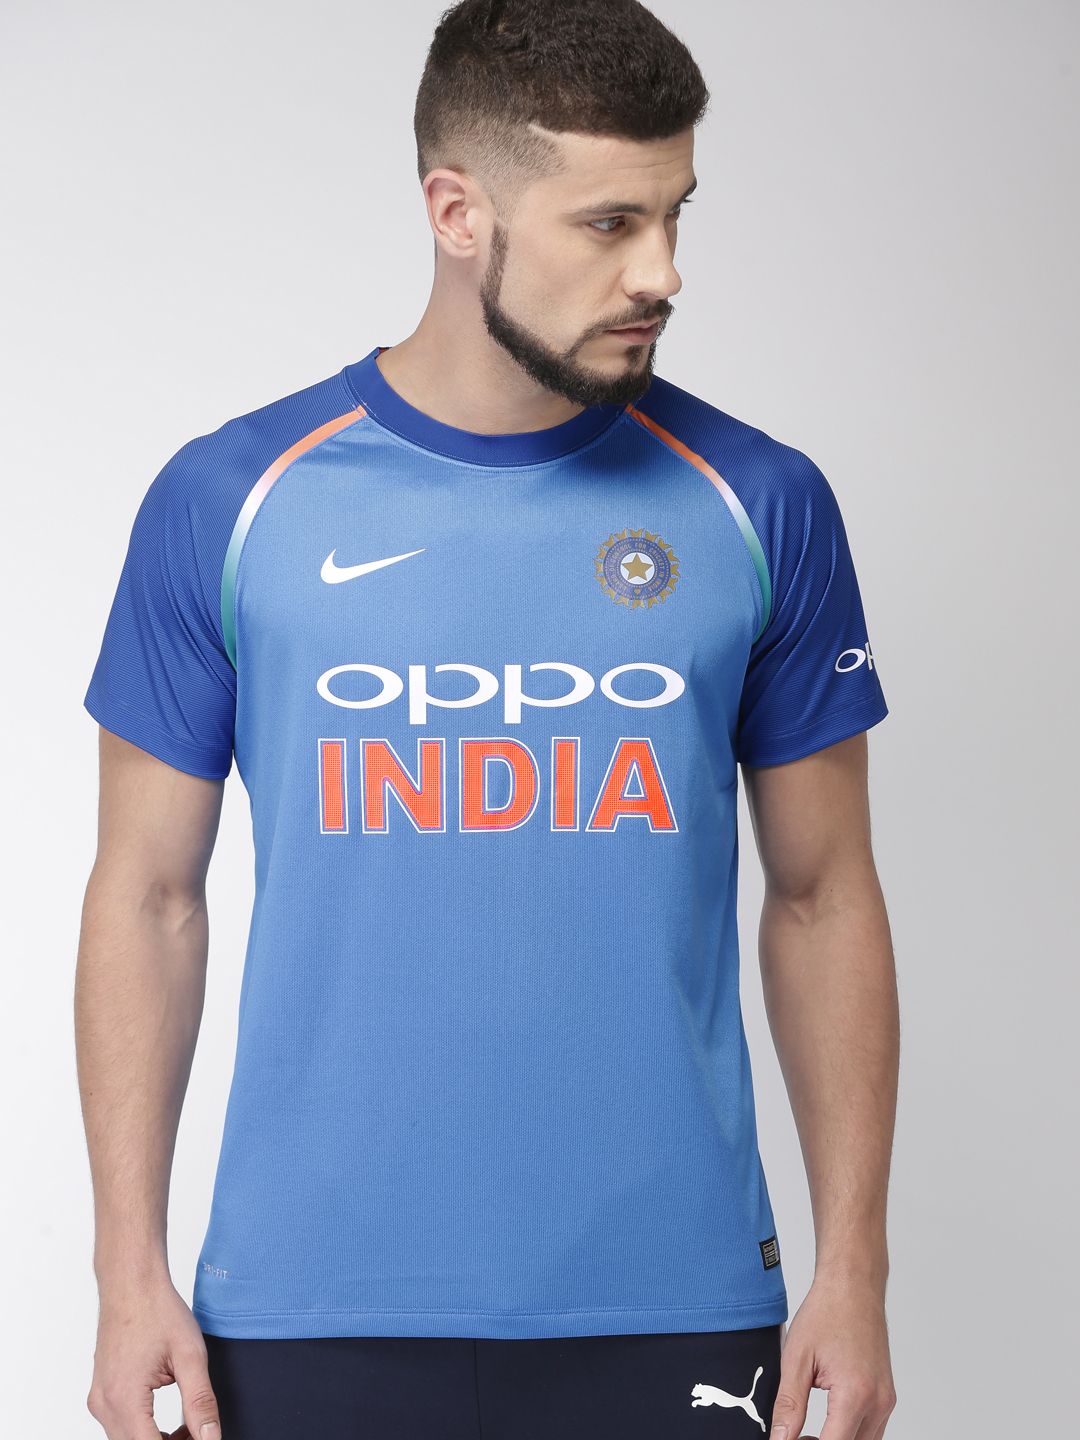 buy india cricket shirt